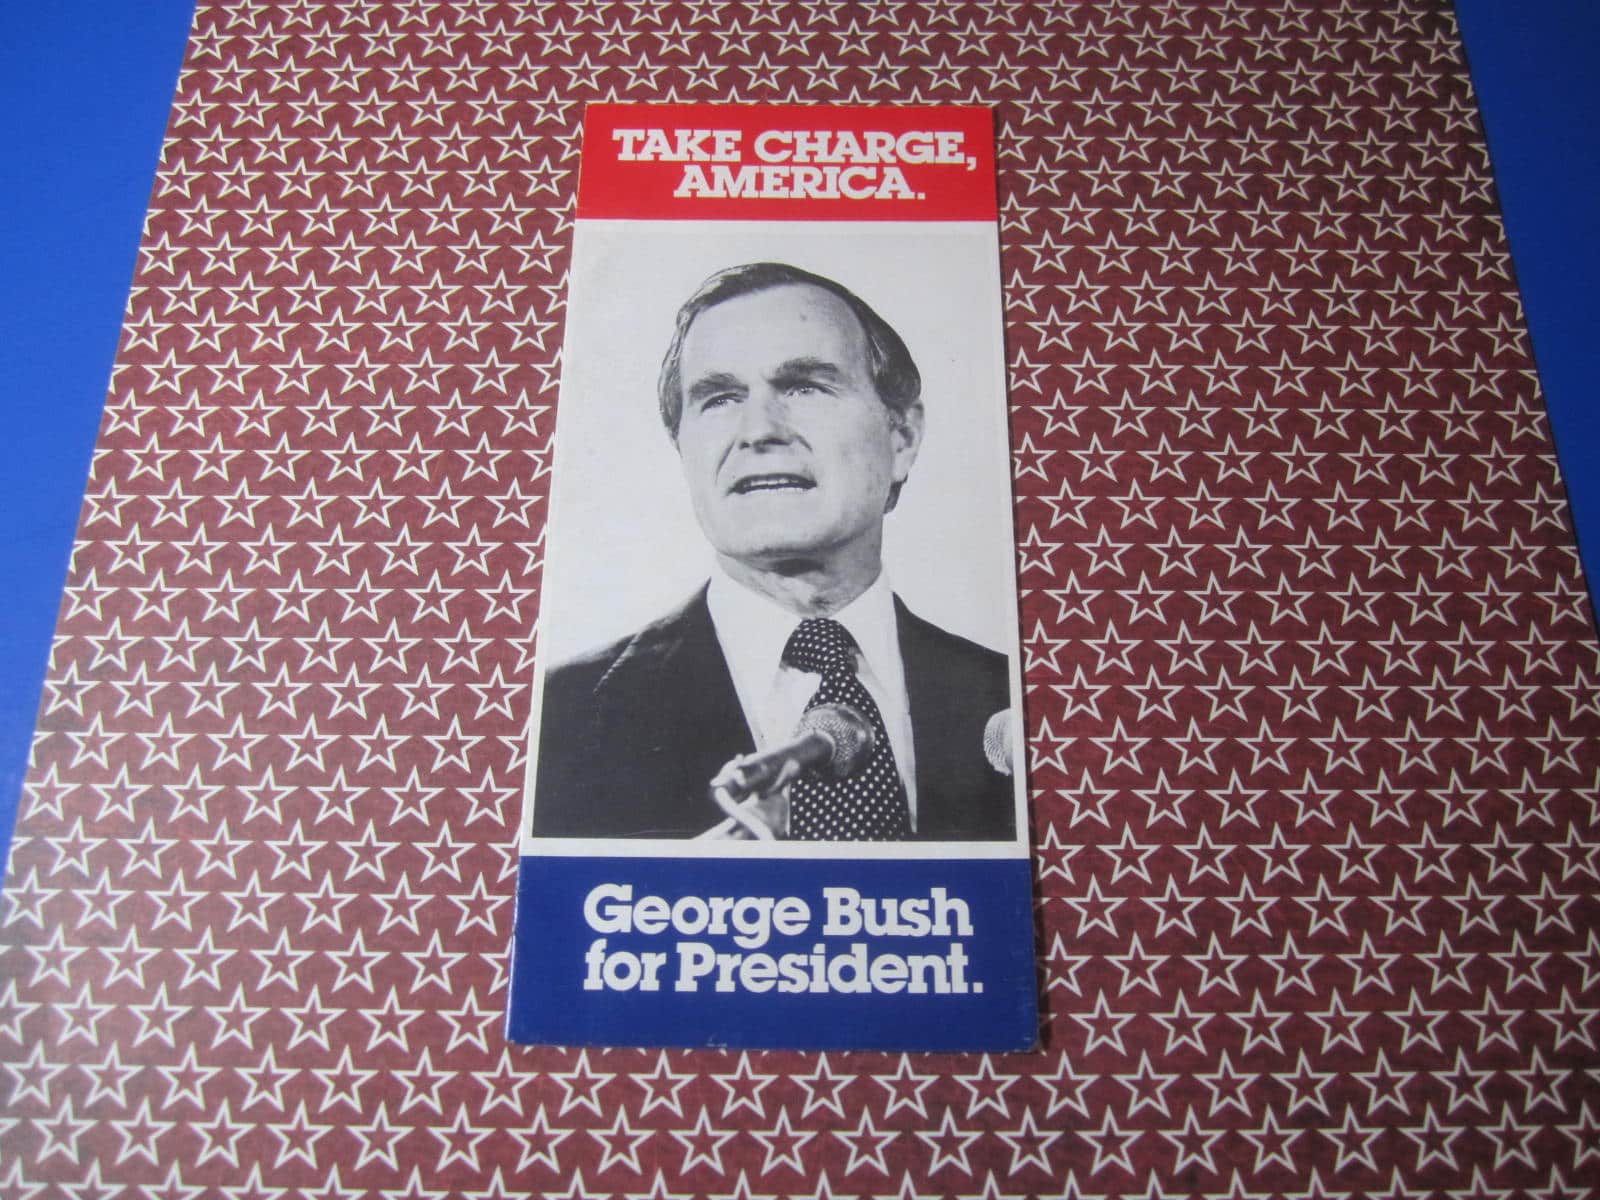 Campaign Take Charge America Literature - George HW Bush